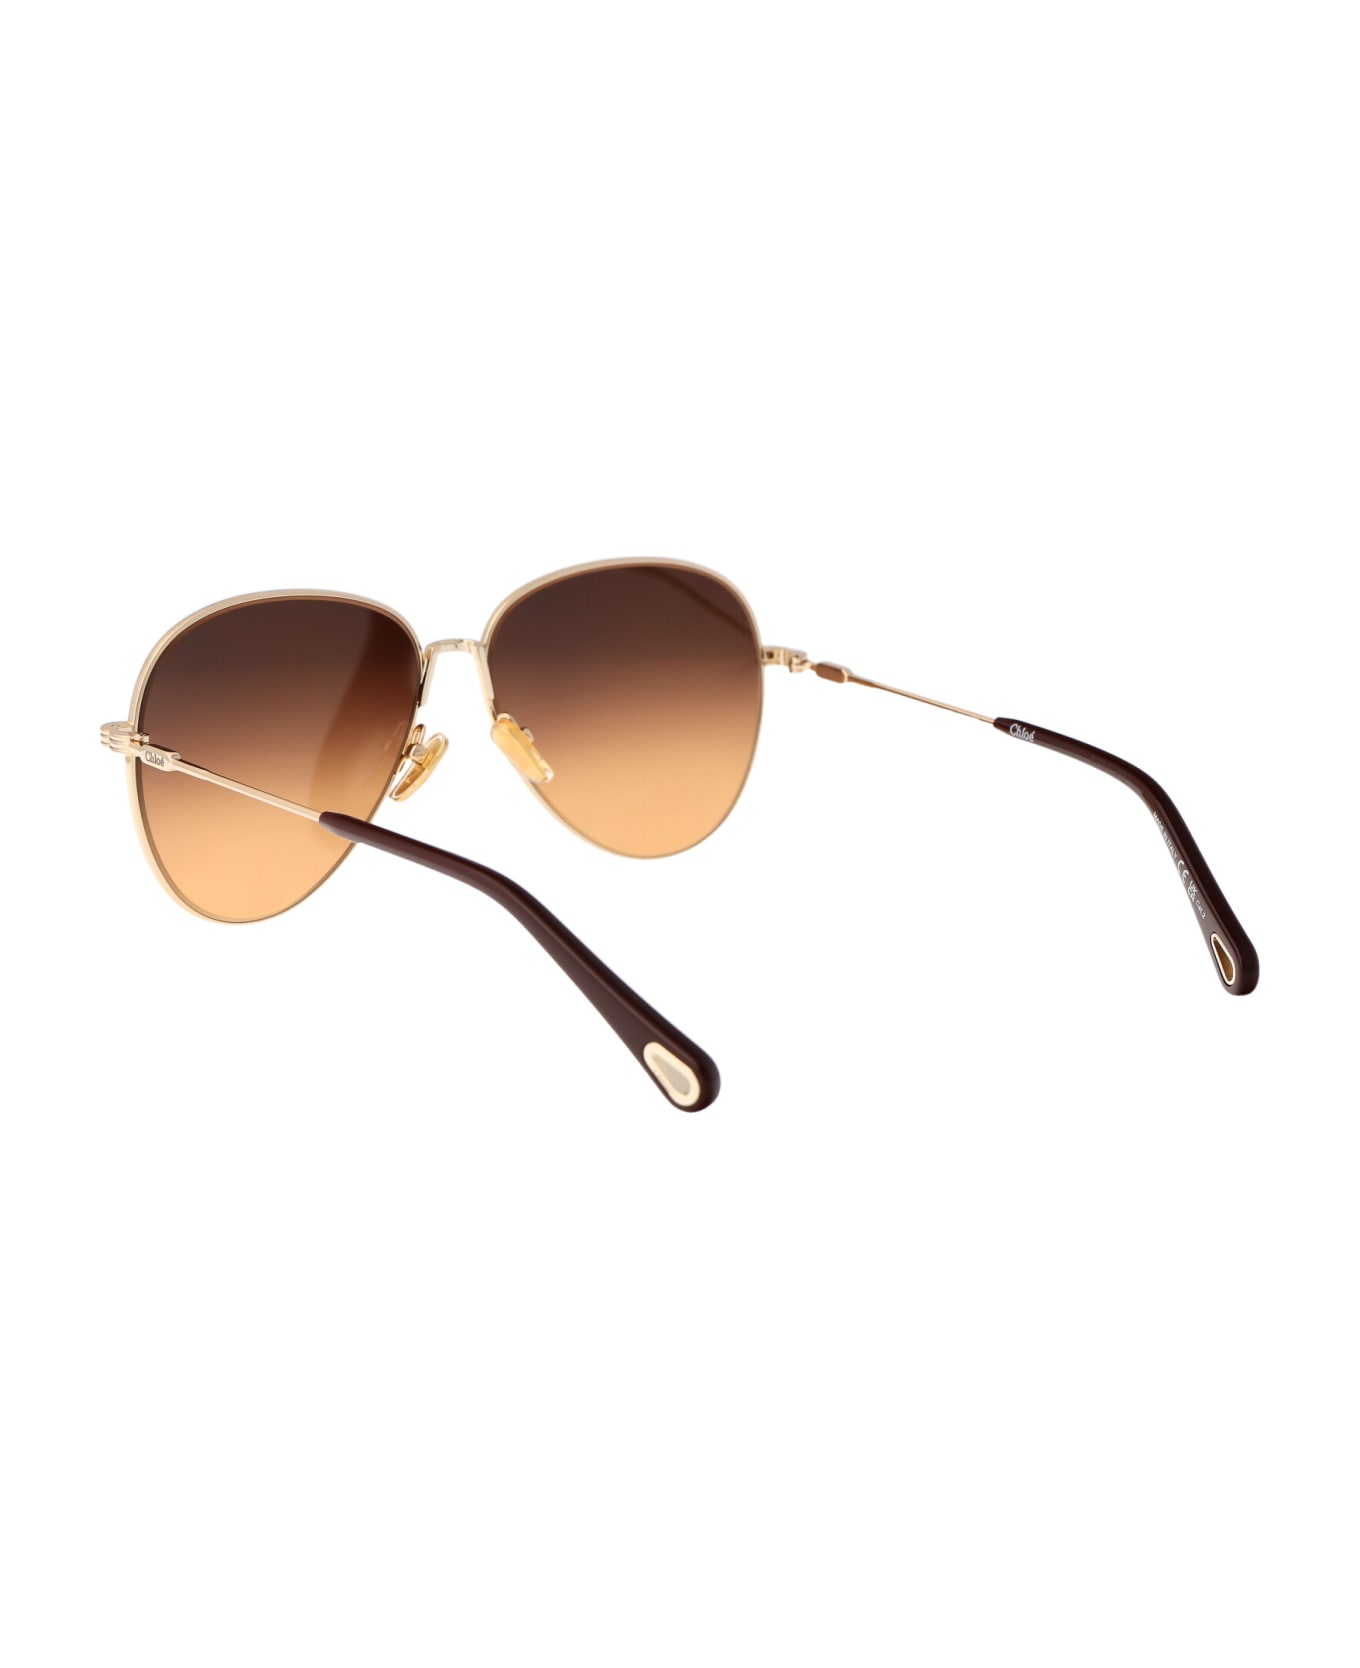 Chloé Eyewear Ch0177s Sunglasses - 003 GOLD GOLD ORANGE